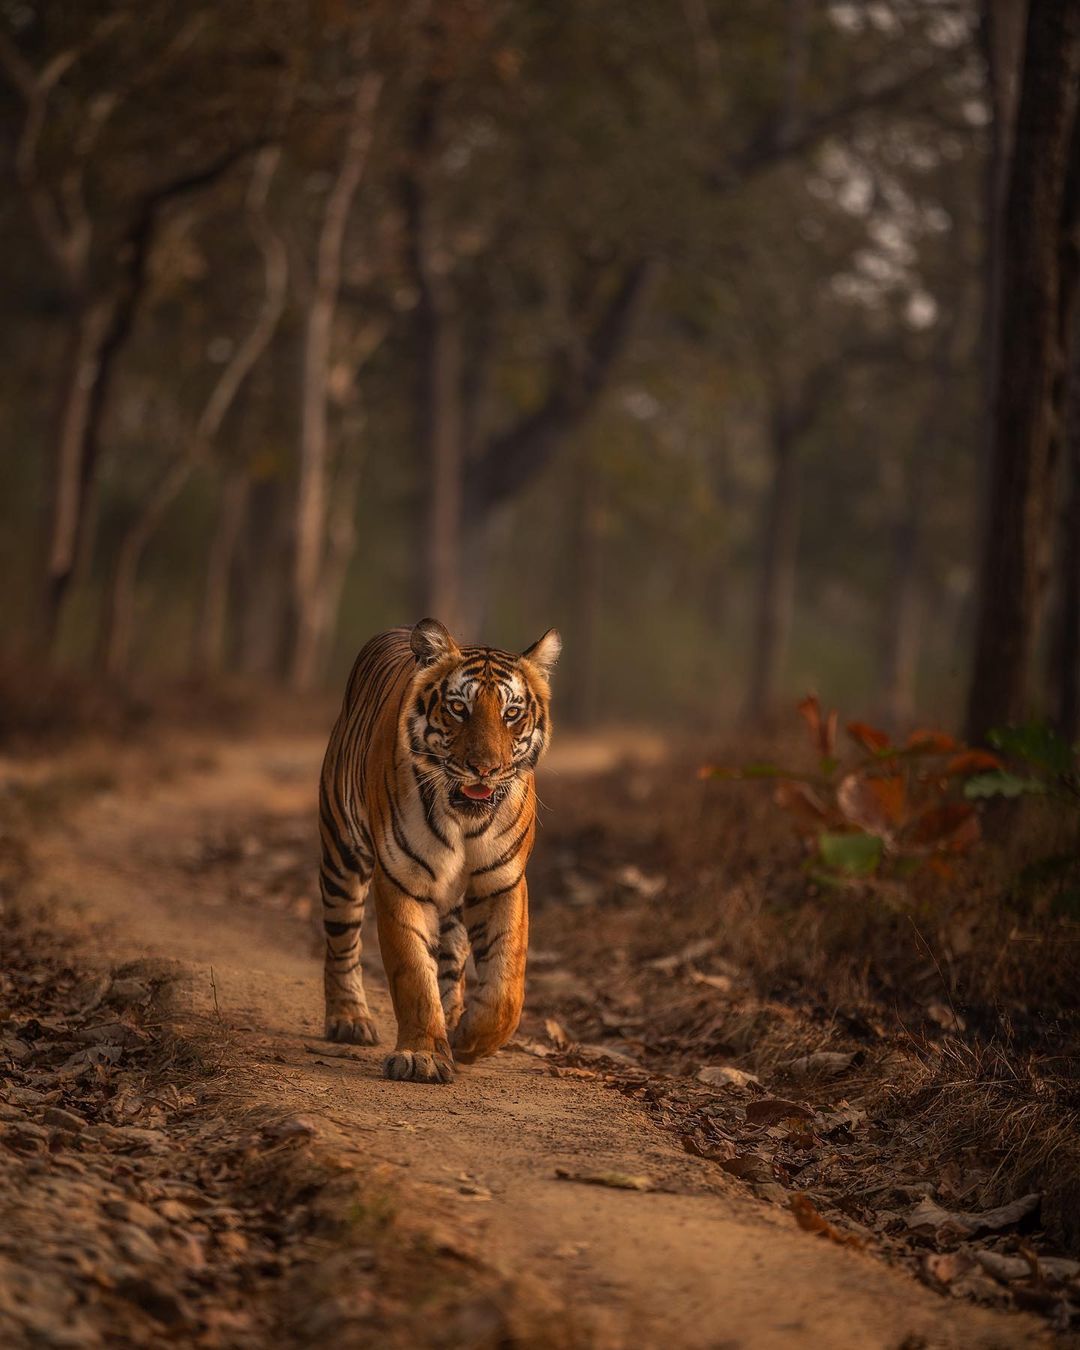 Wildlife Sanctuary in India : Tiger named Sundari at the Bandipur Tiger Reserve.
